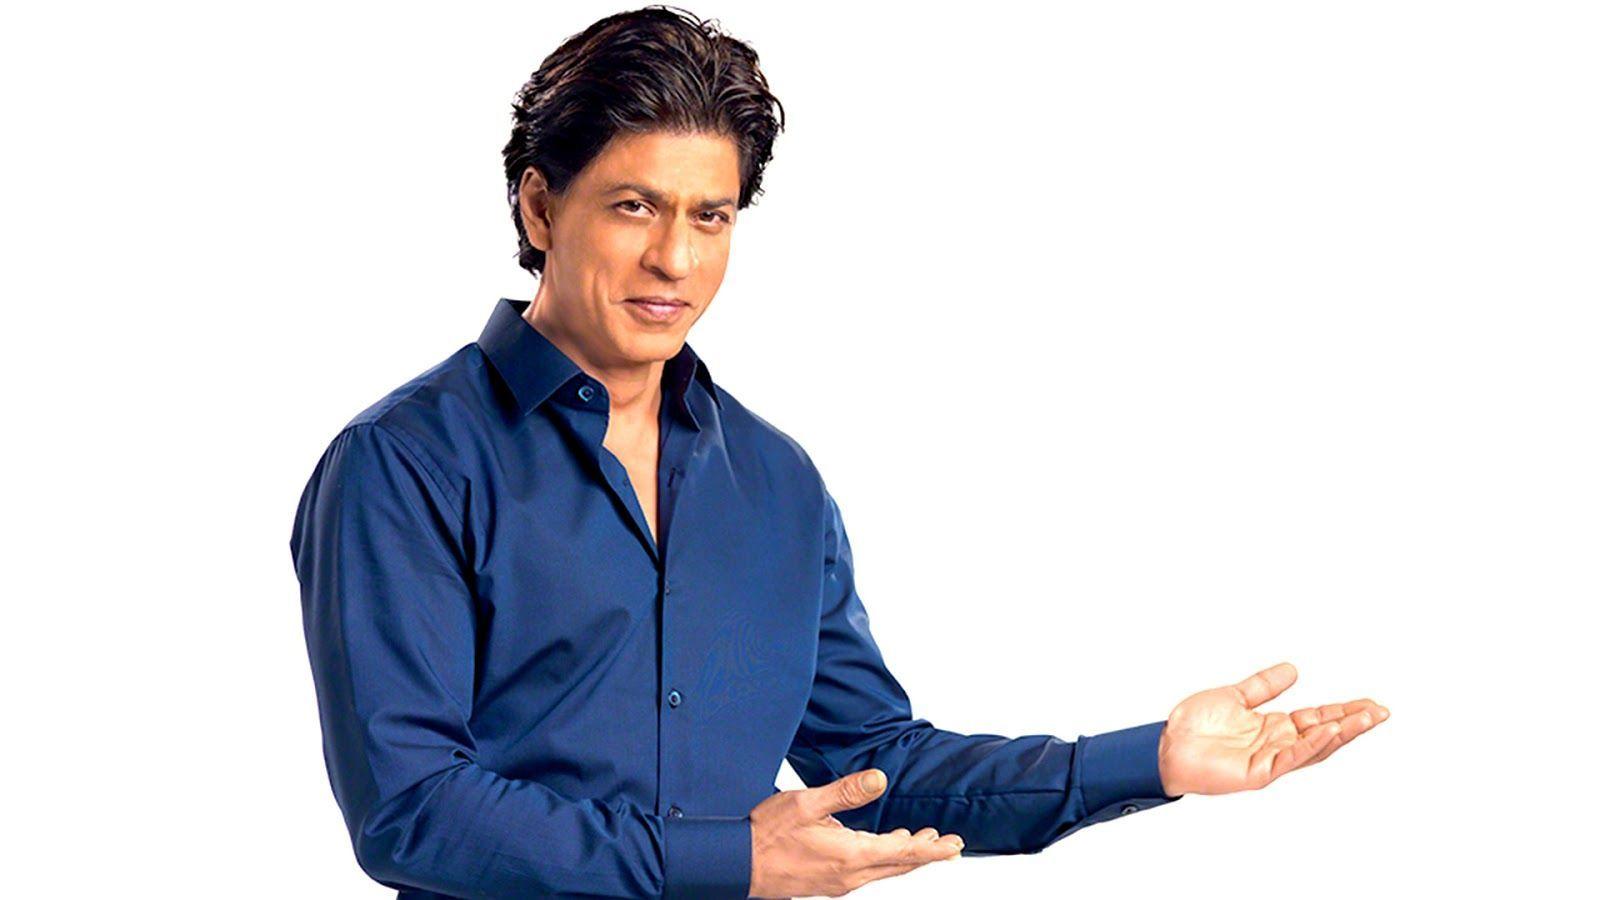 Shahrukh Khan Wallpapers HD Download Free 1080p